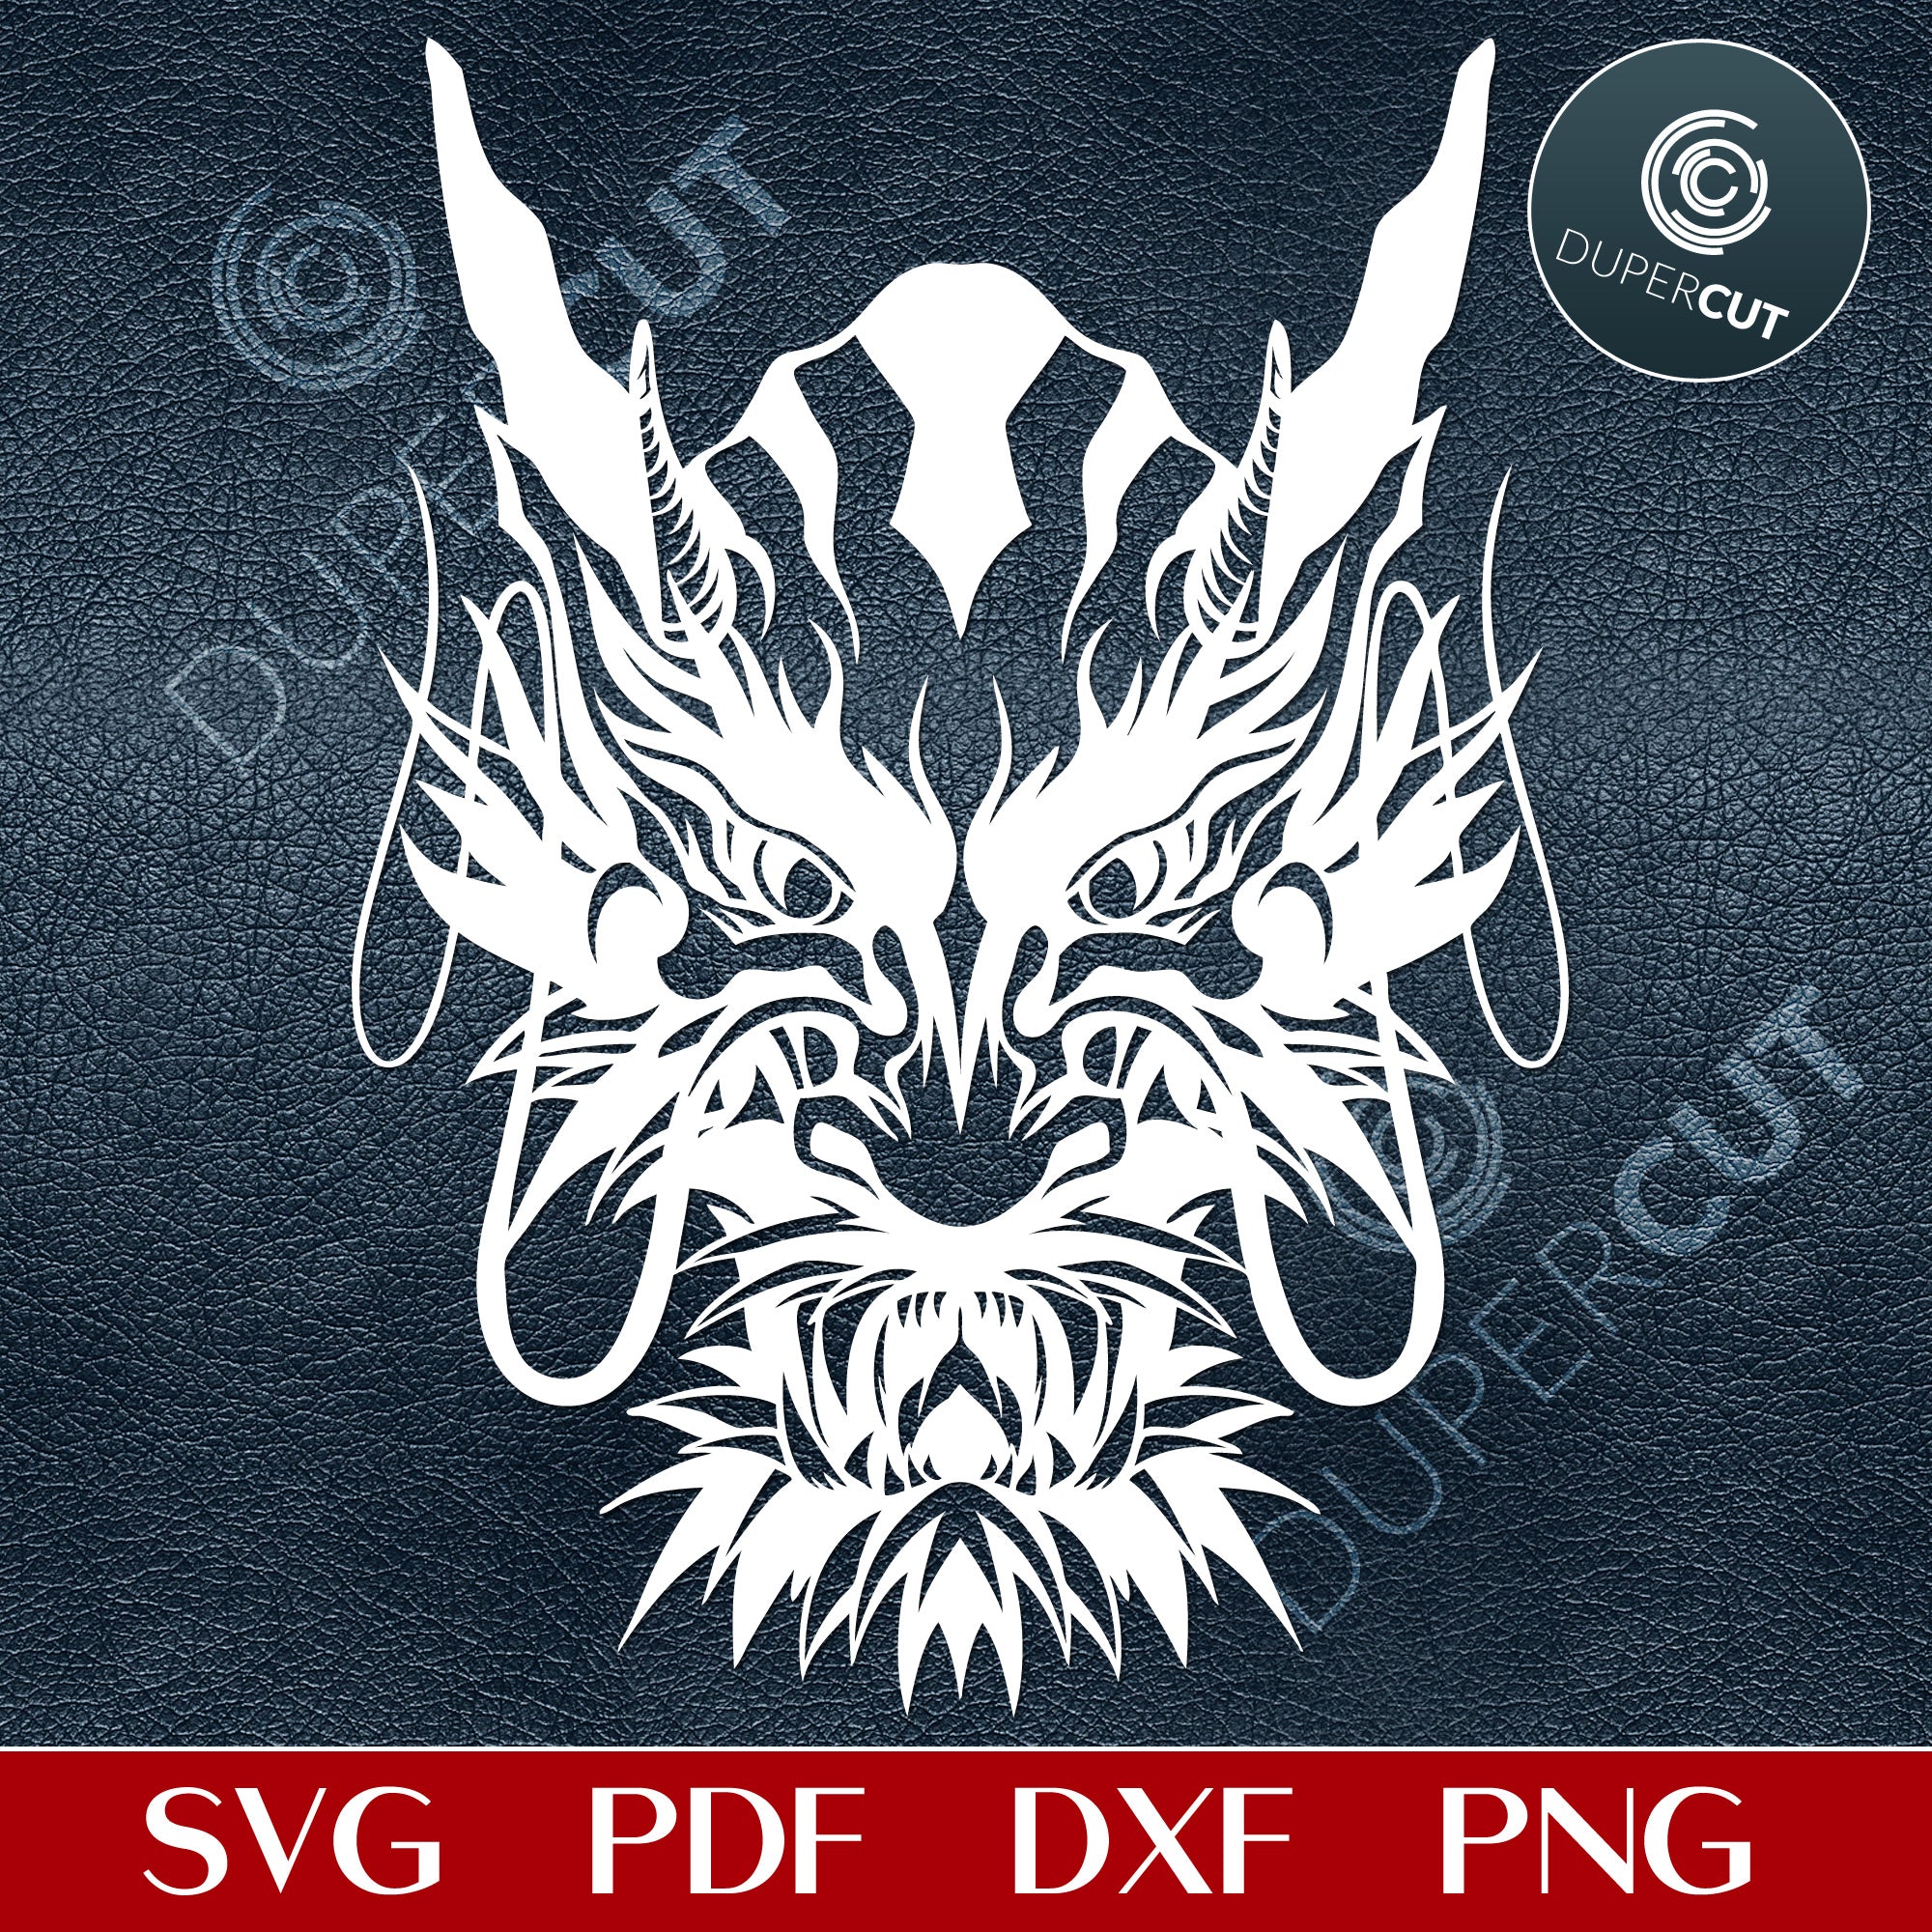 Dragon Head - Svg / Pdf / Dxf / Png – Dupercut